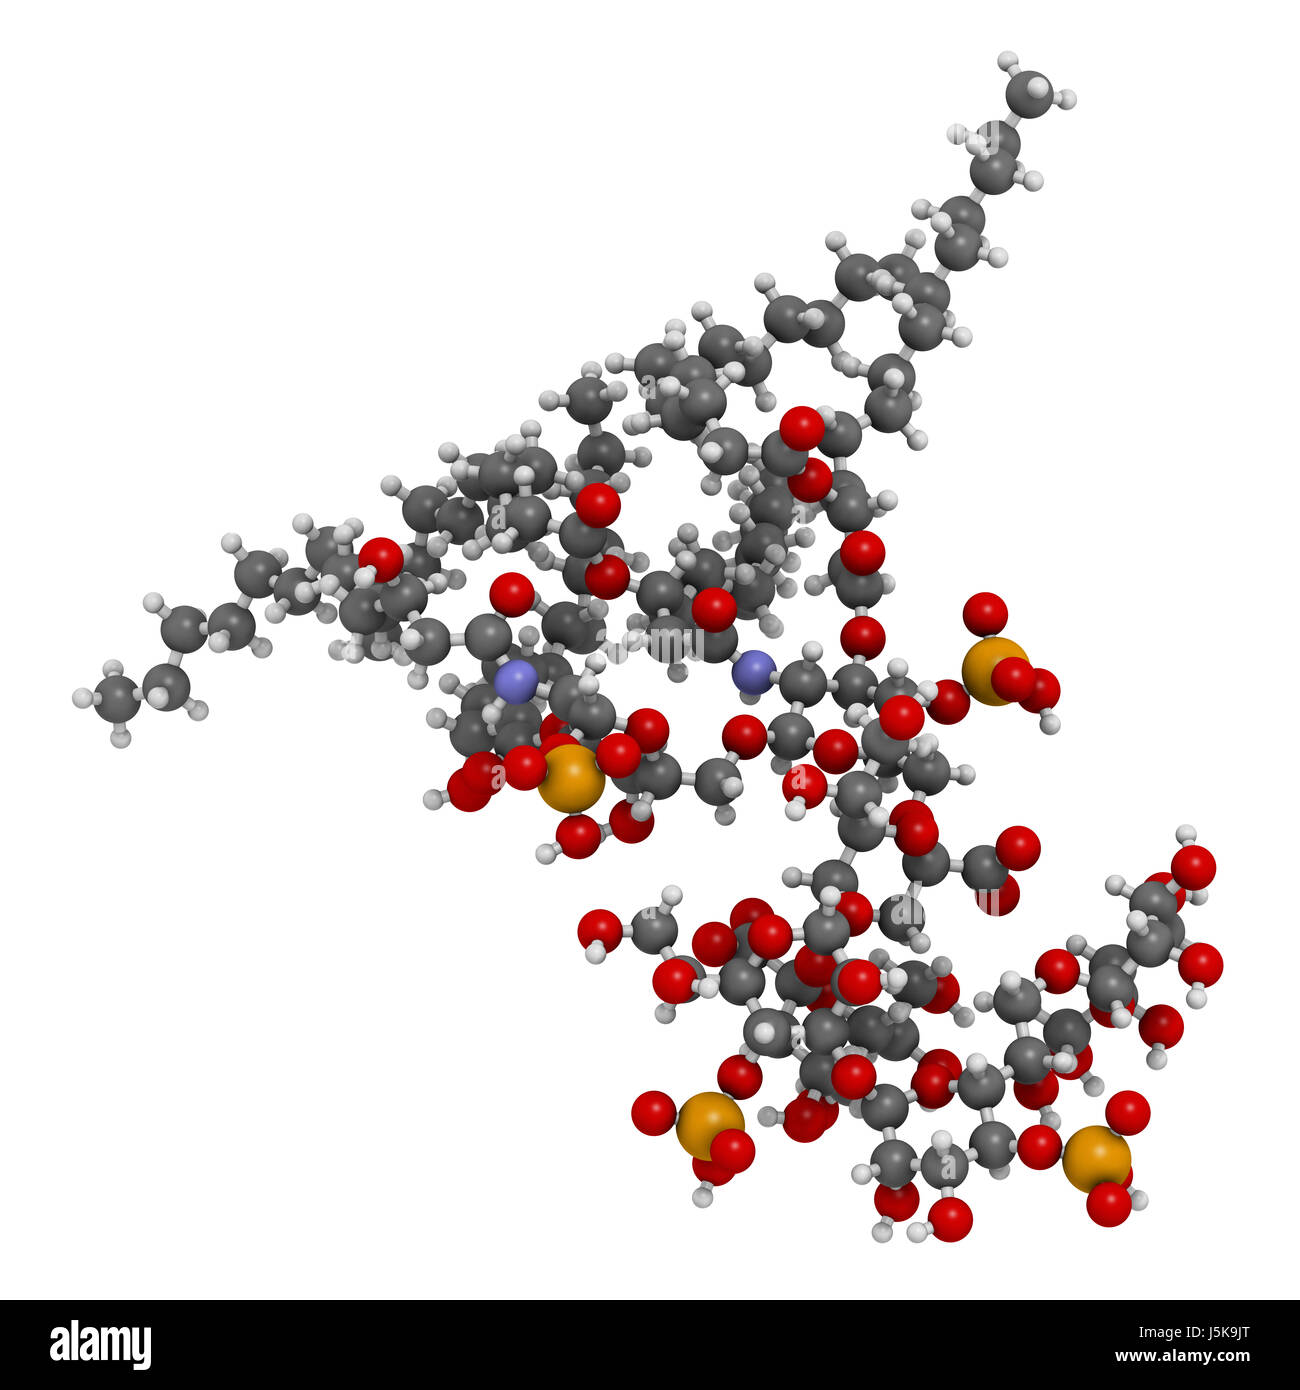 Lipopolysaccharid -Fotos und -Bildmaterial in hoher Auflösung – Alamy